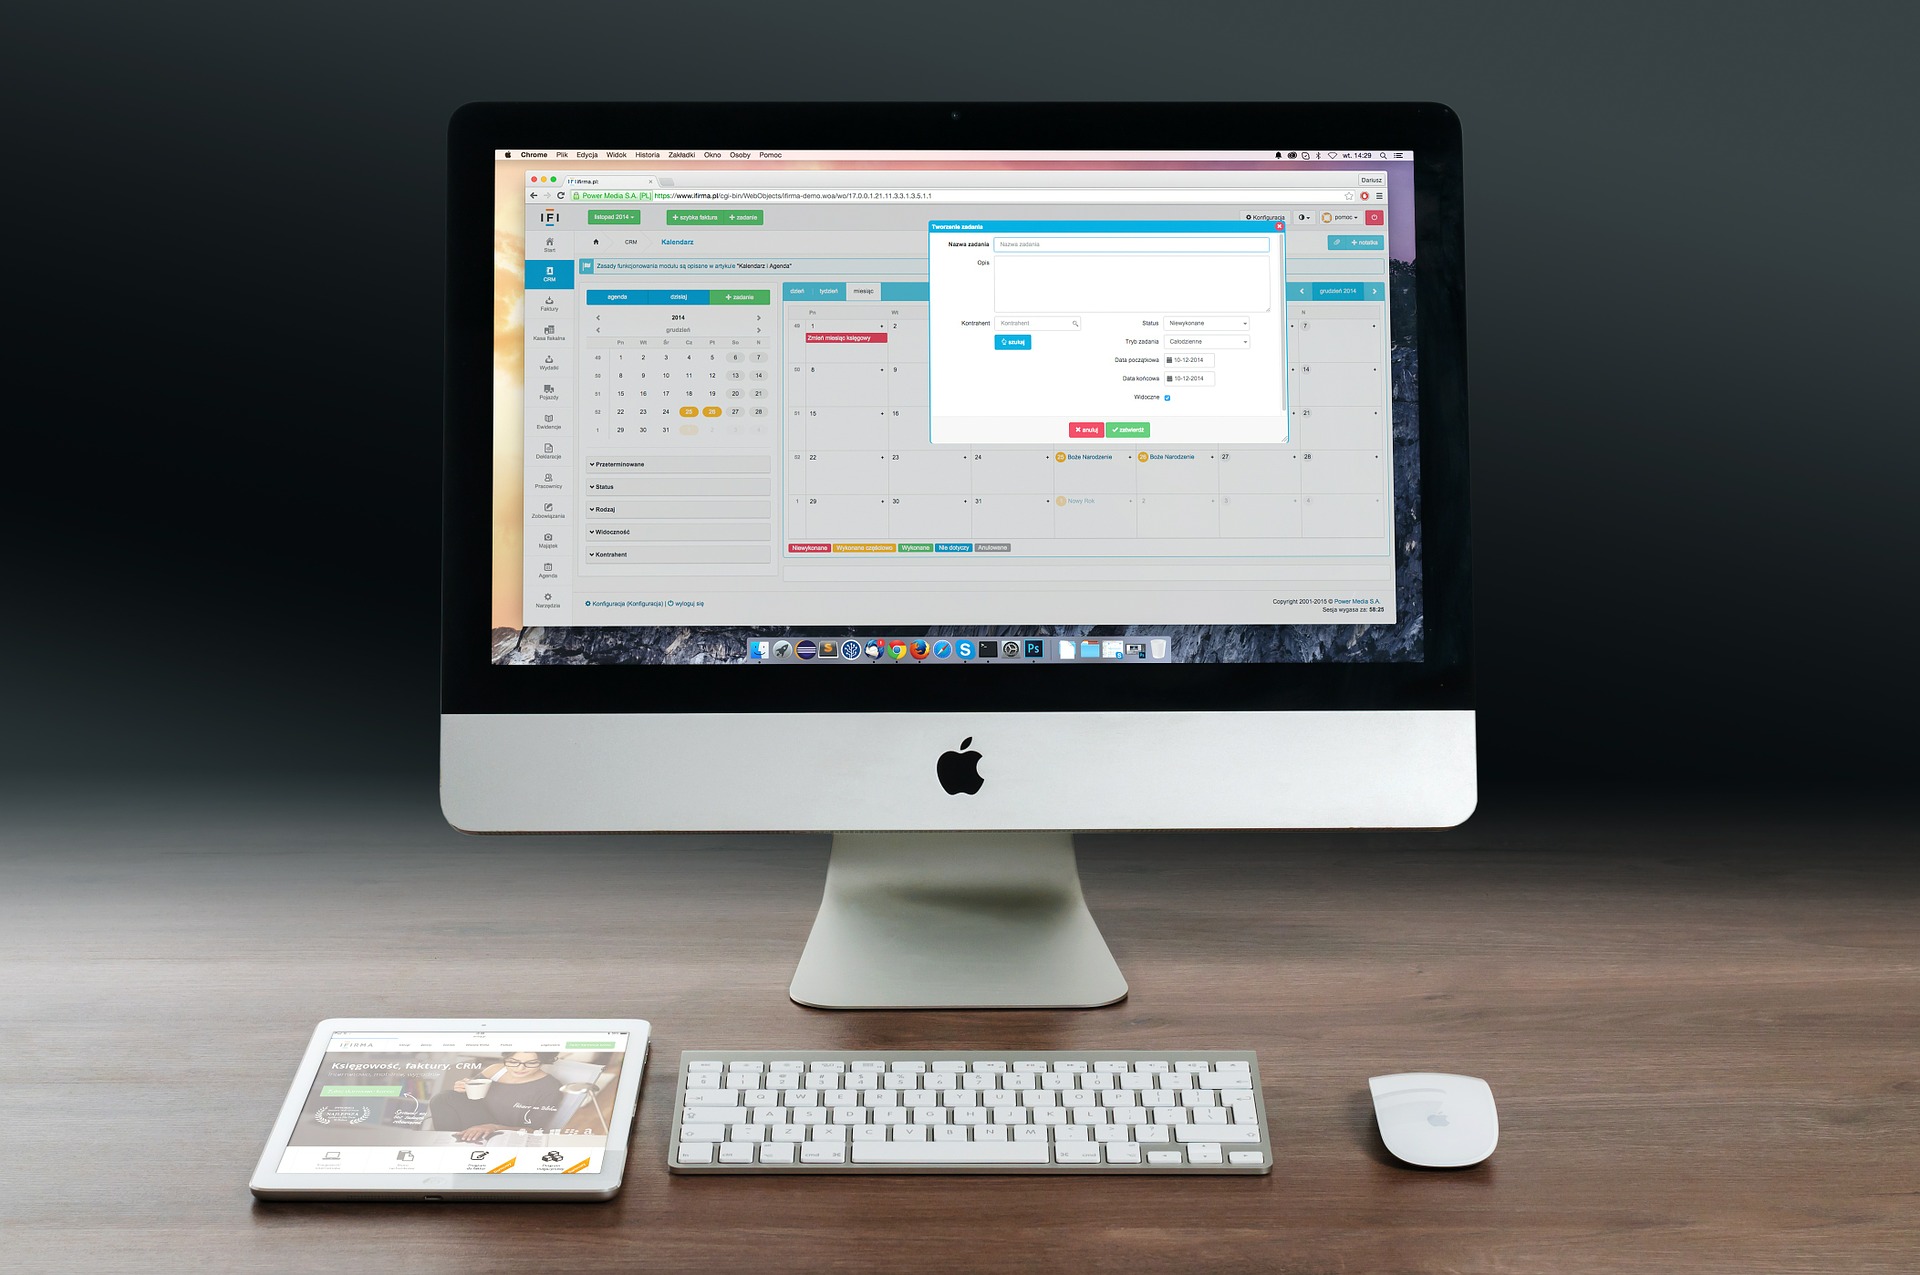 iMac Desktop computer